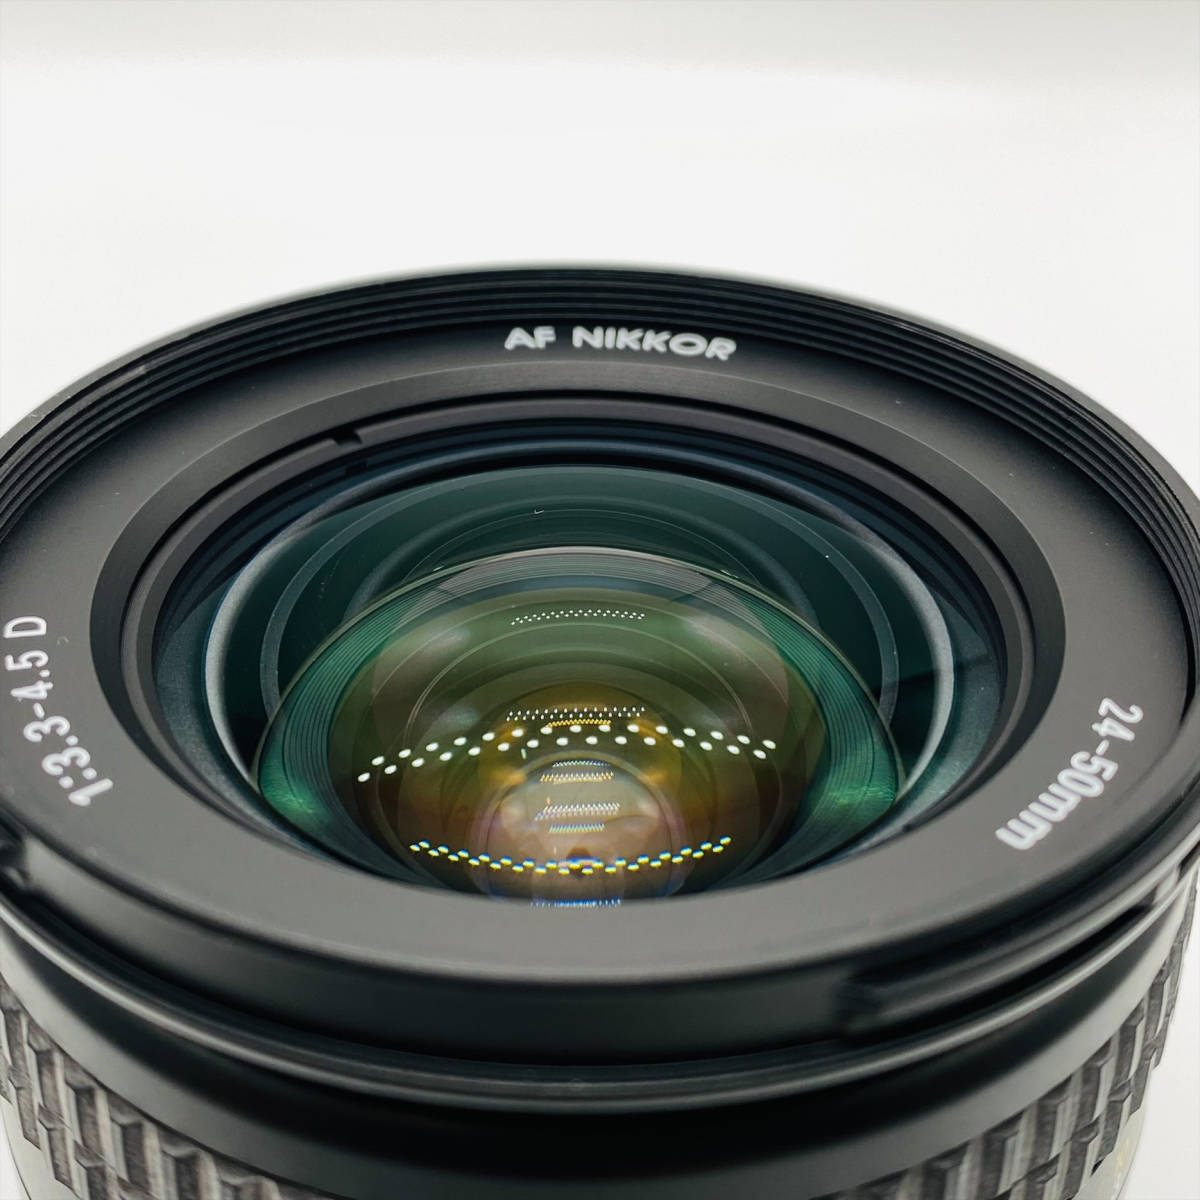 Nikon ニコン Zoom Nikkor ズーム ニッコール 24-50mm F3.3-4.5D 7359 1円出品 格安出品 一眼レフ デジタル カメラレンズ 高級 美品 _画像2